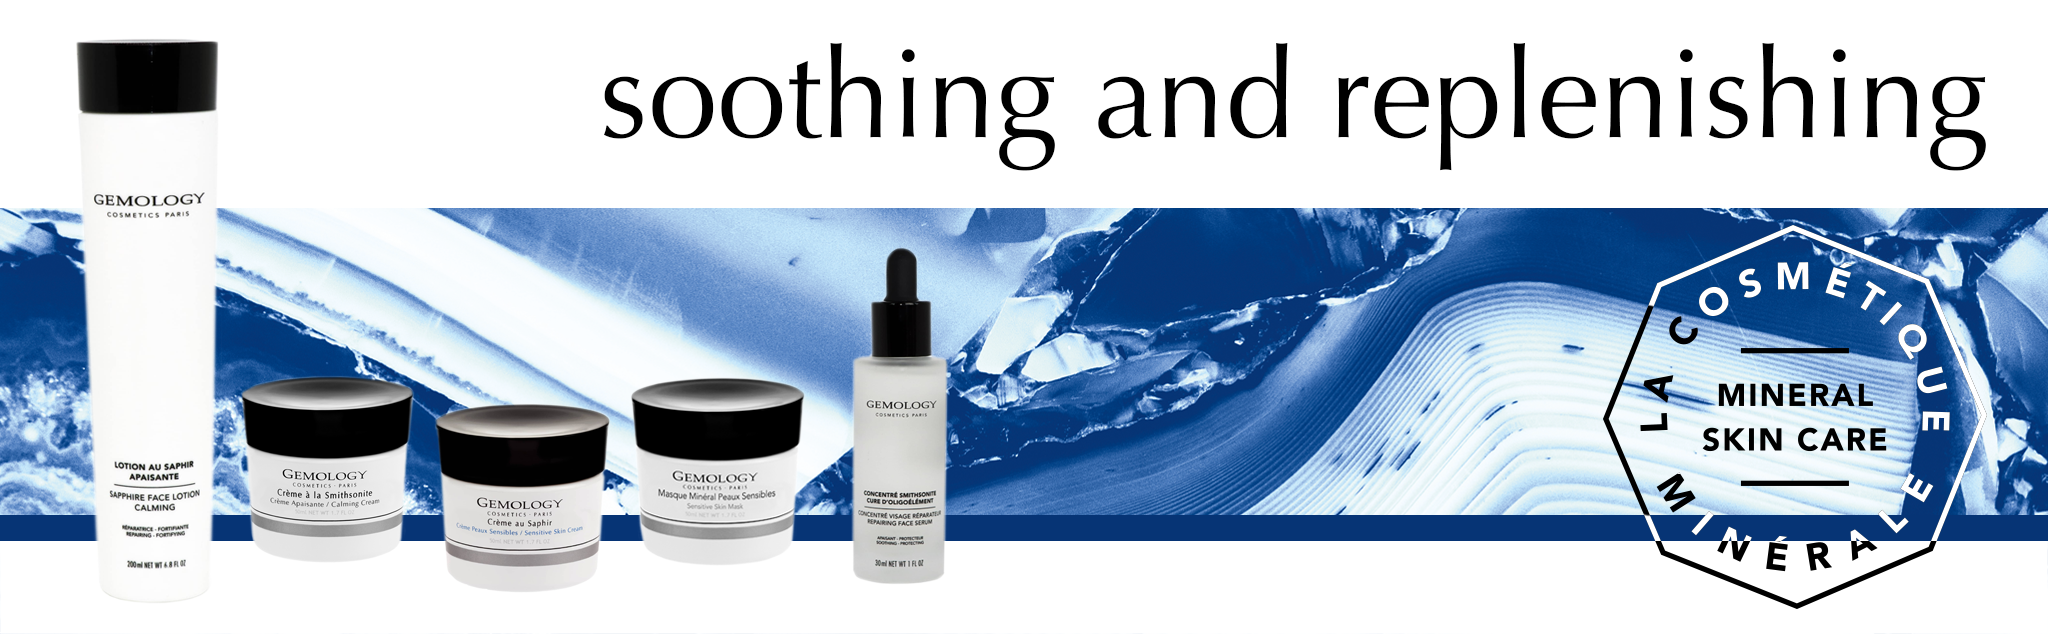 Gemology-cosmetics-paris-sensitive-repairing-soothing-replenishing-skincare-products-australia-new-zealand